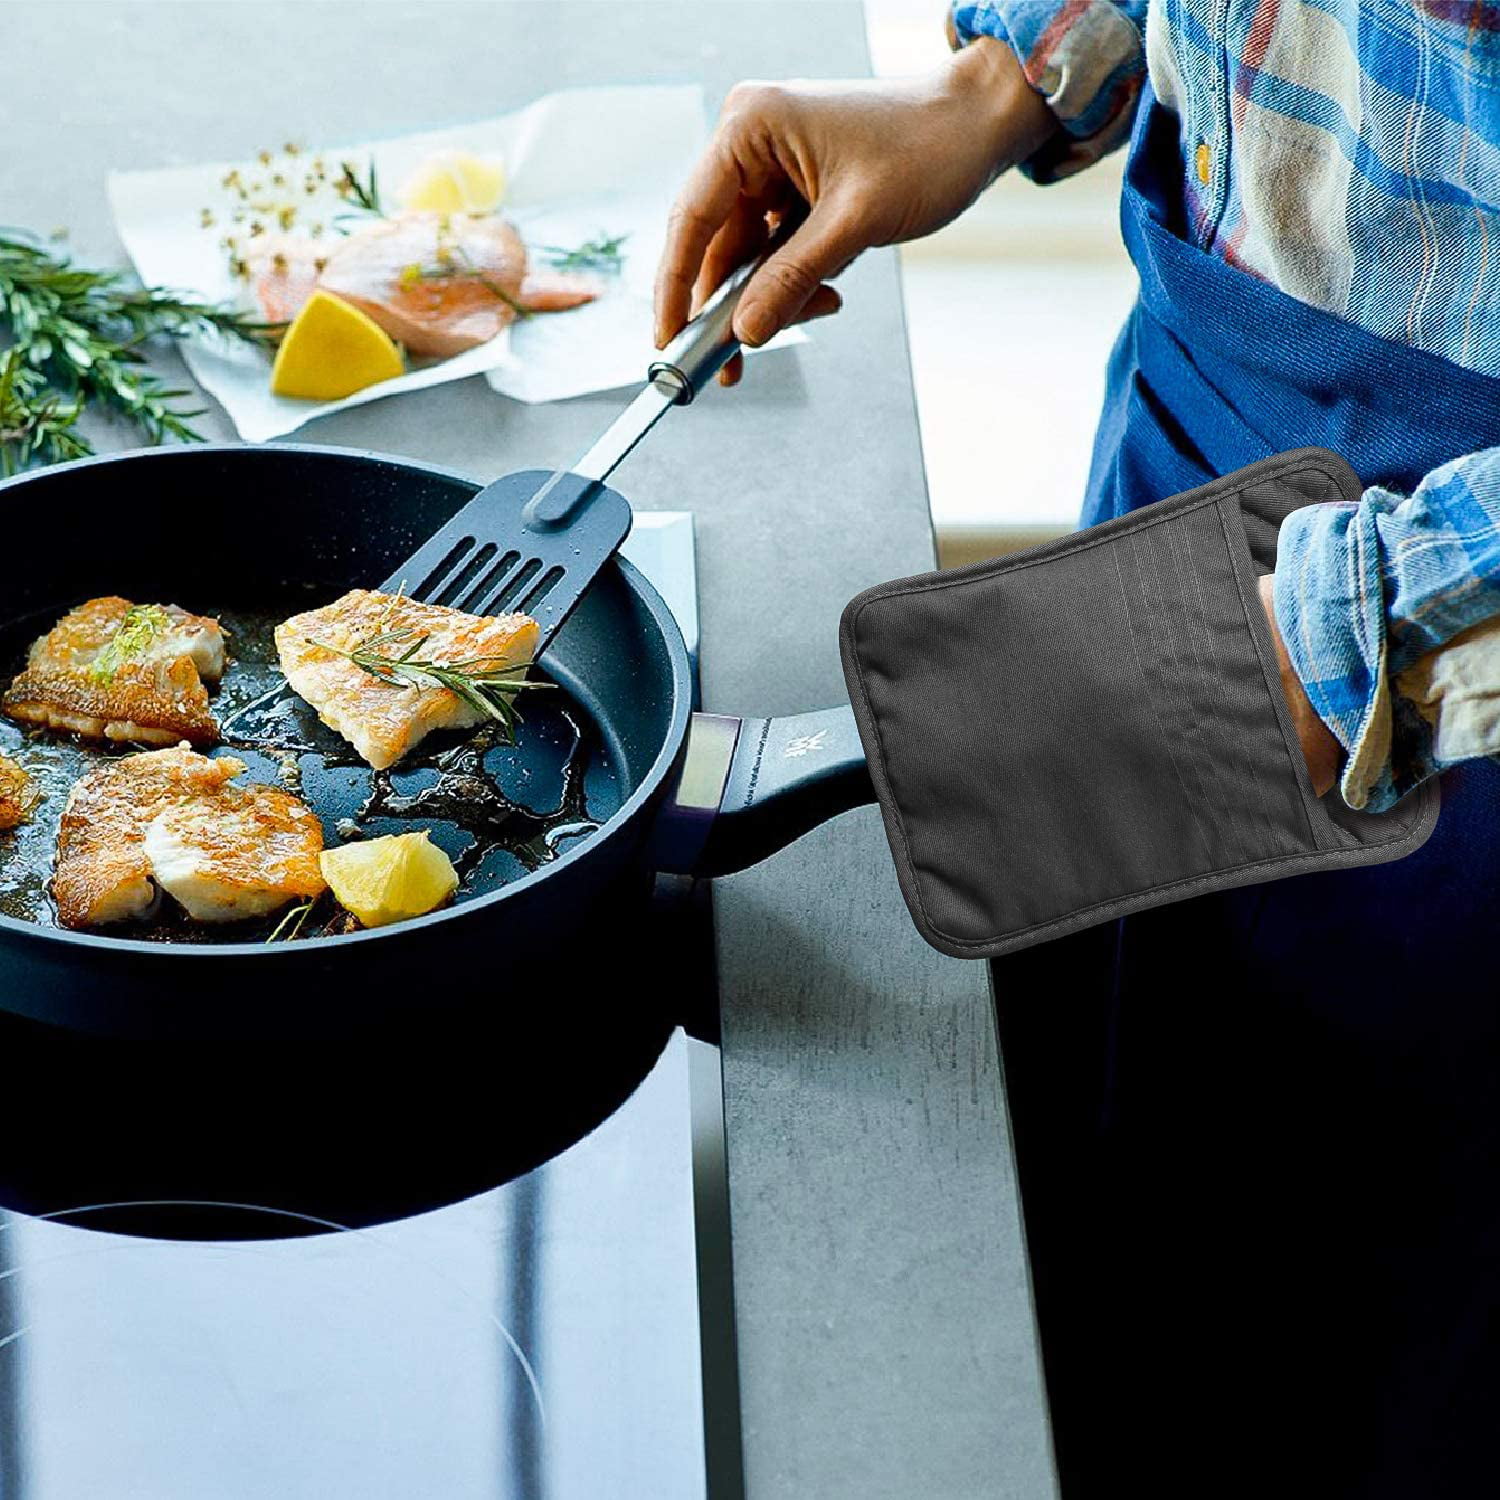 7”x 9” Set of 4 Kitchen Basic Trivet for Cooking and Baking Cotton Pocket Pot Holder Kitchen Hot Pad Heat Resistant Black